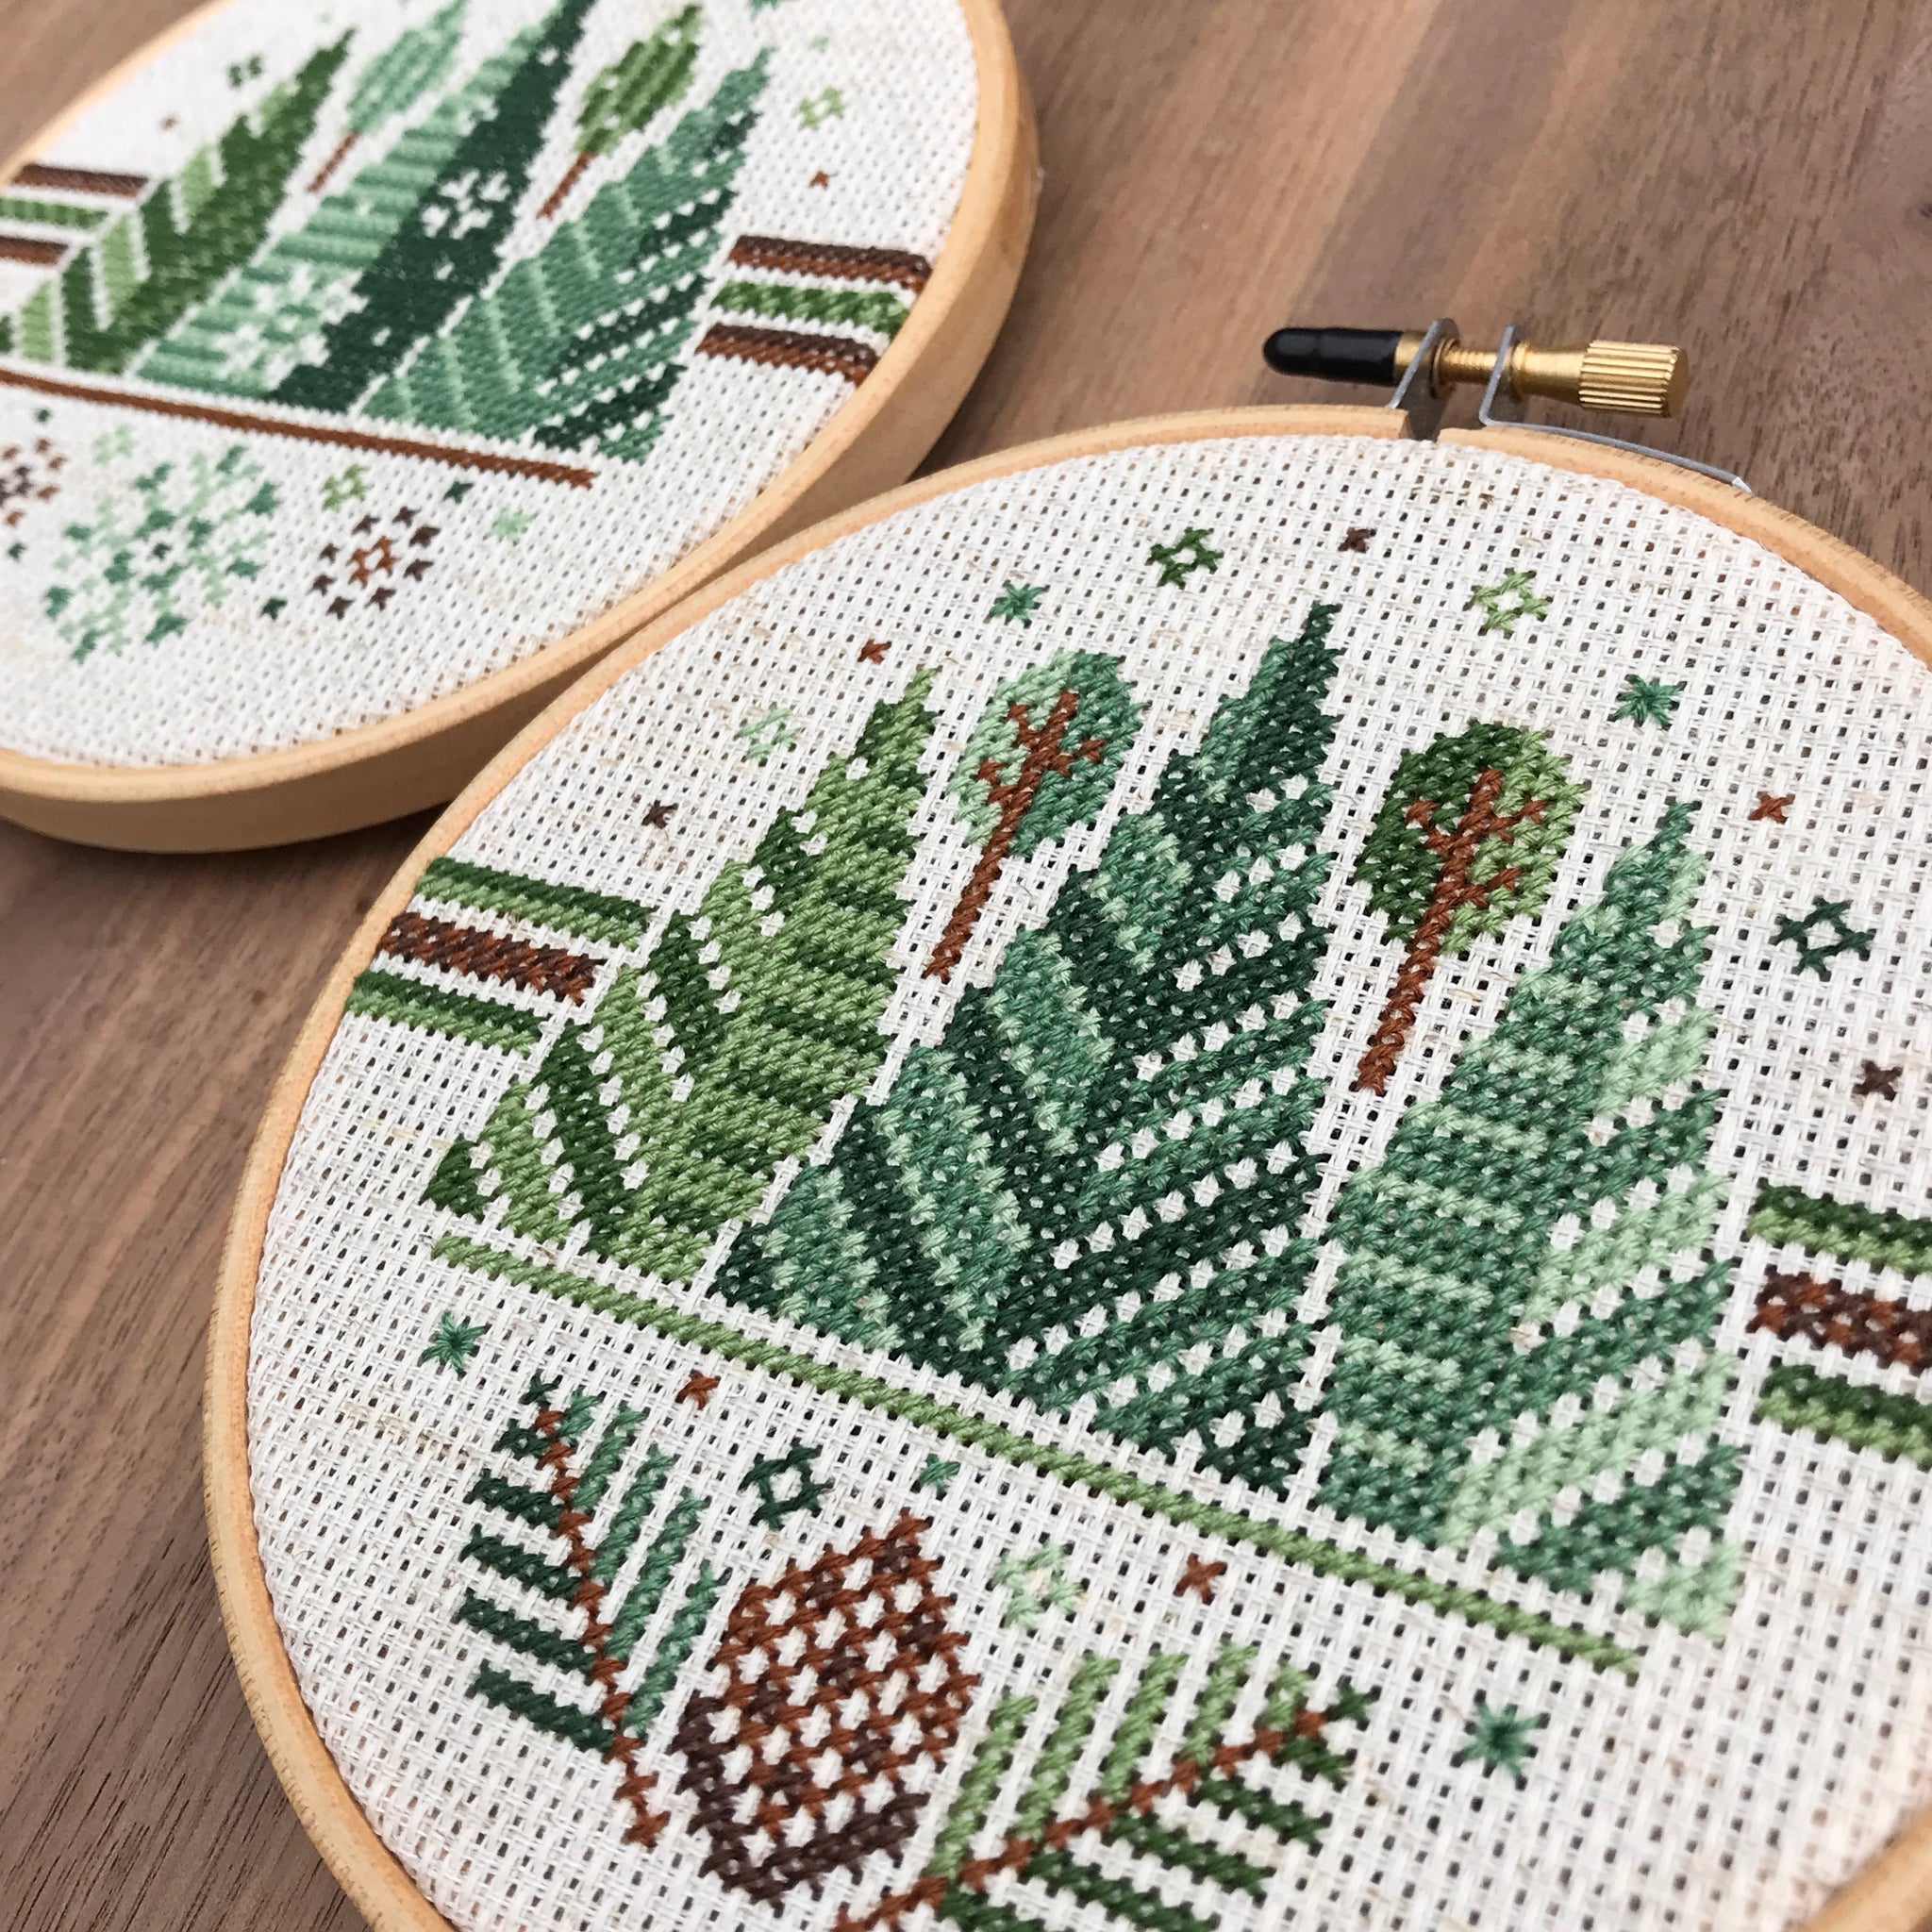 Pine Trees Cross Stitch Kit – Pigeon Coop